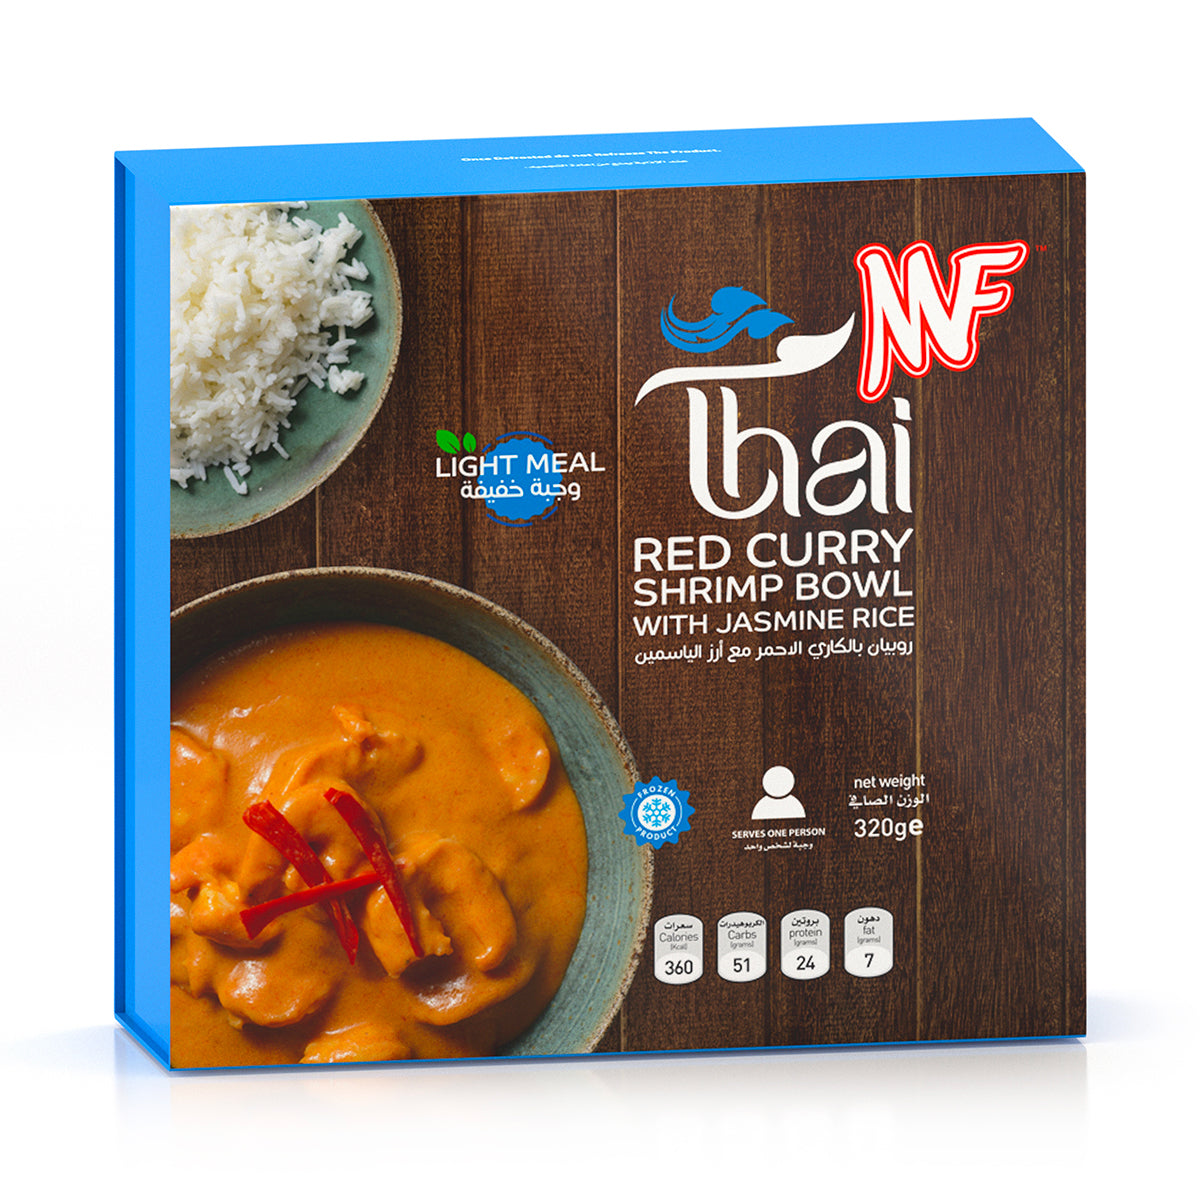 MF Thai Red Curry Shrimp Bowl with Jasmine Rice 320g (Light Meal)